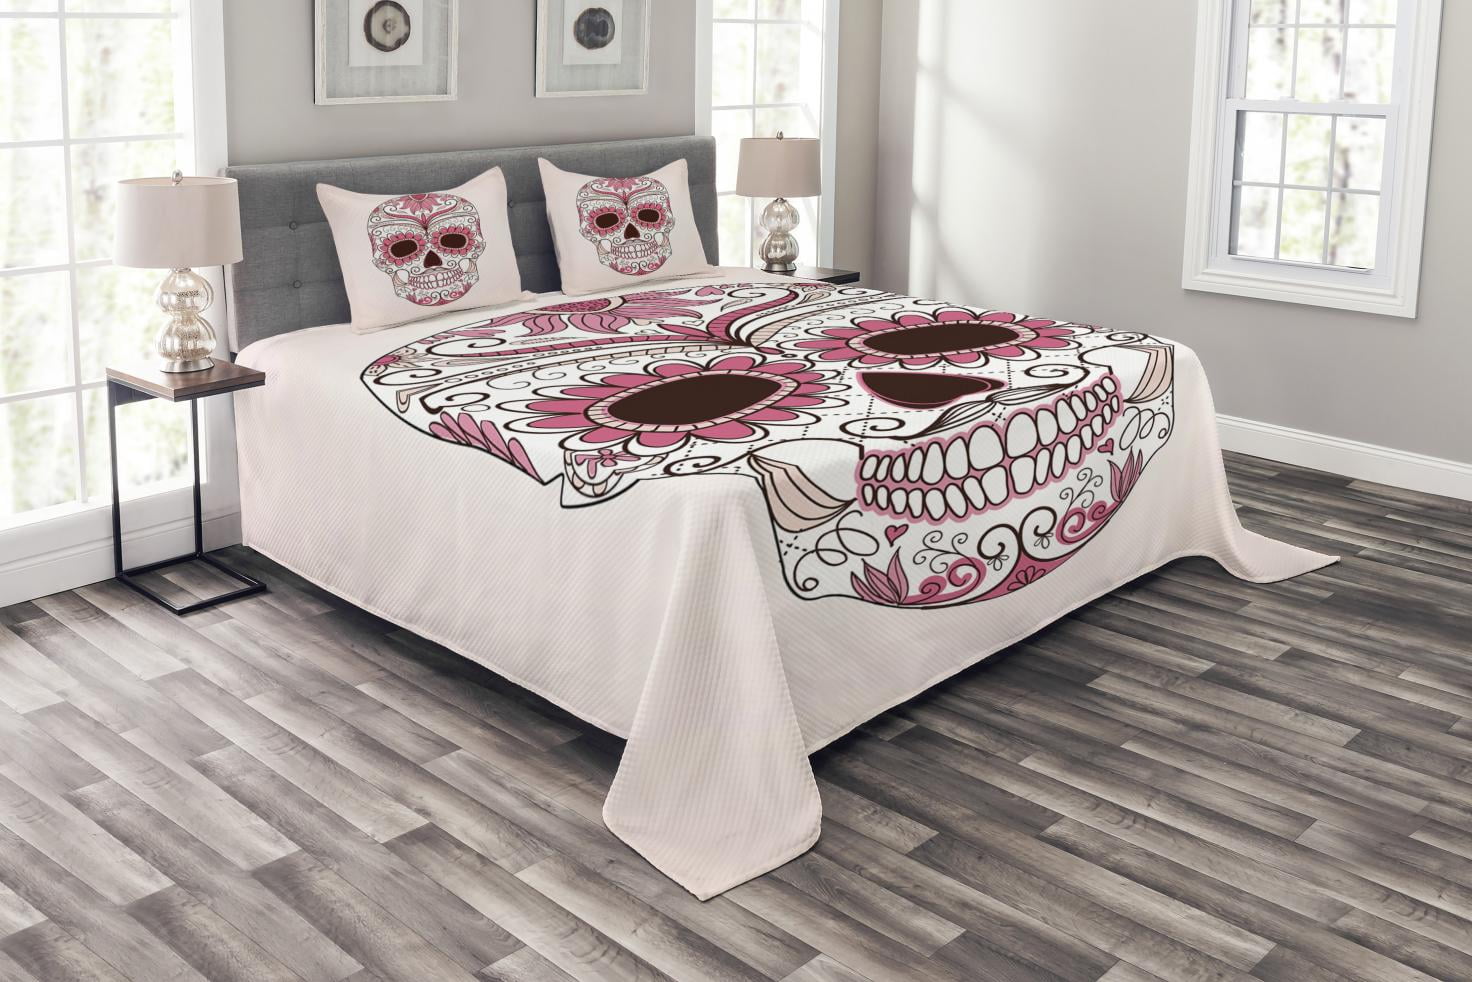 Sugar Skull Quilted Bedspread /& Pillow Shams Set Mexican Ornaments Print